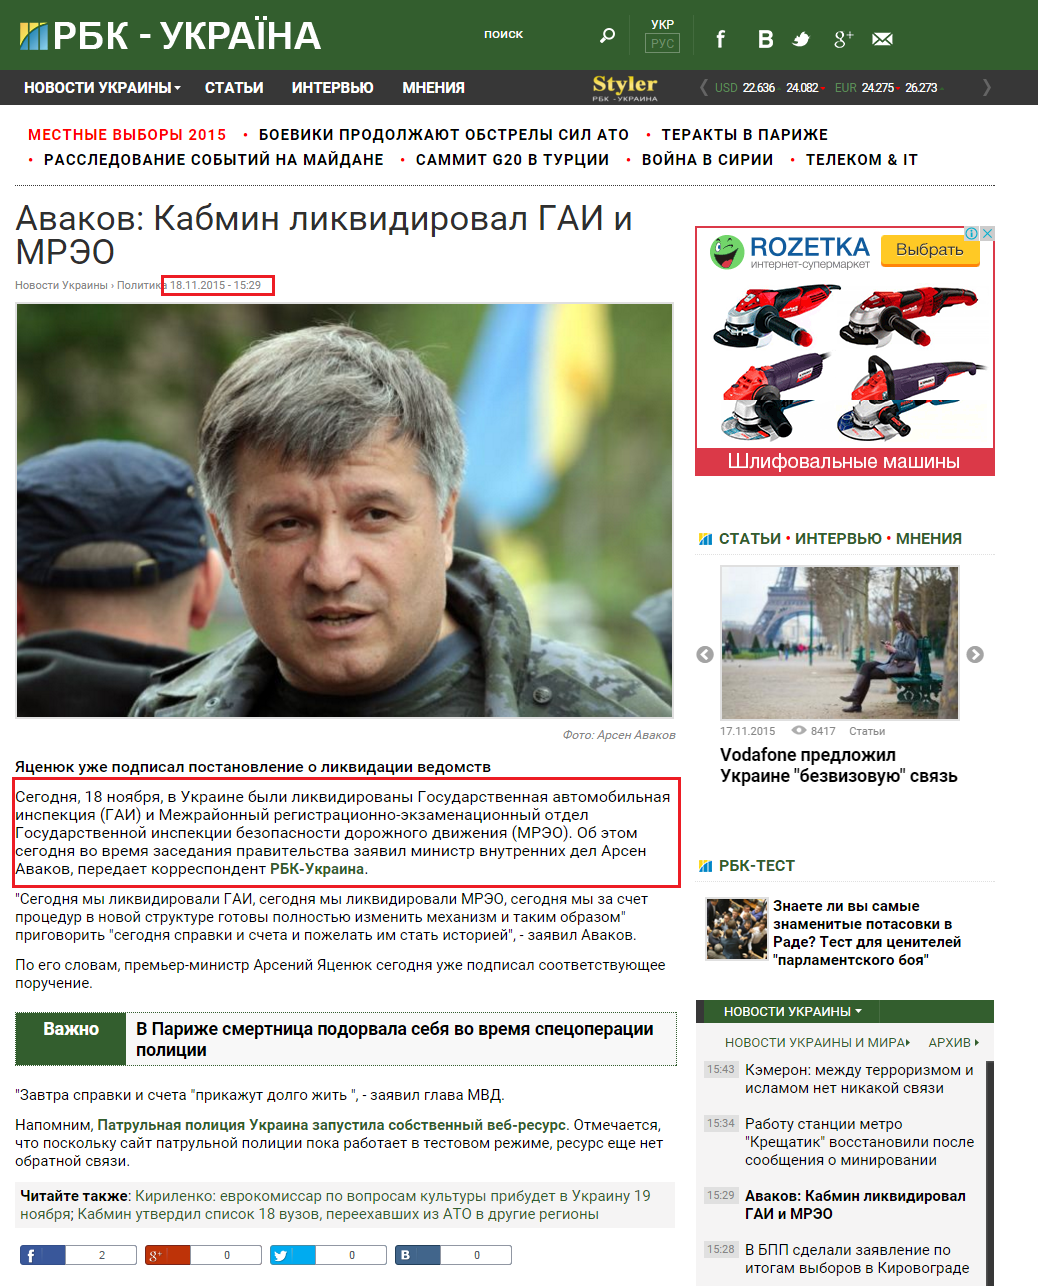 http://www.rbc.ua/rus/news/avakov-kabmin-likvidiroval-gai-mreo-1447853426.html